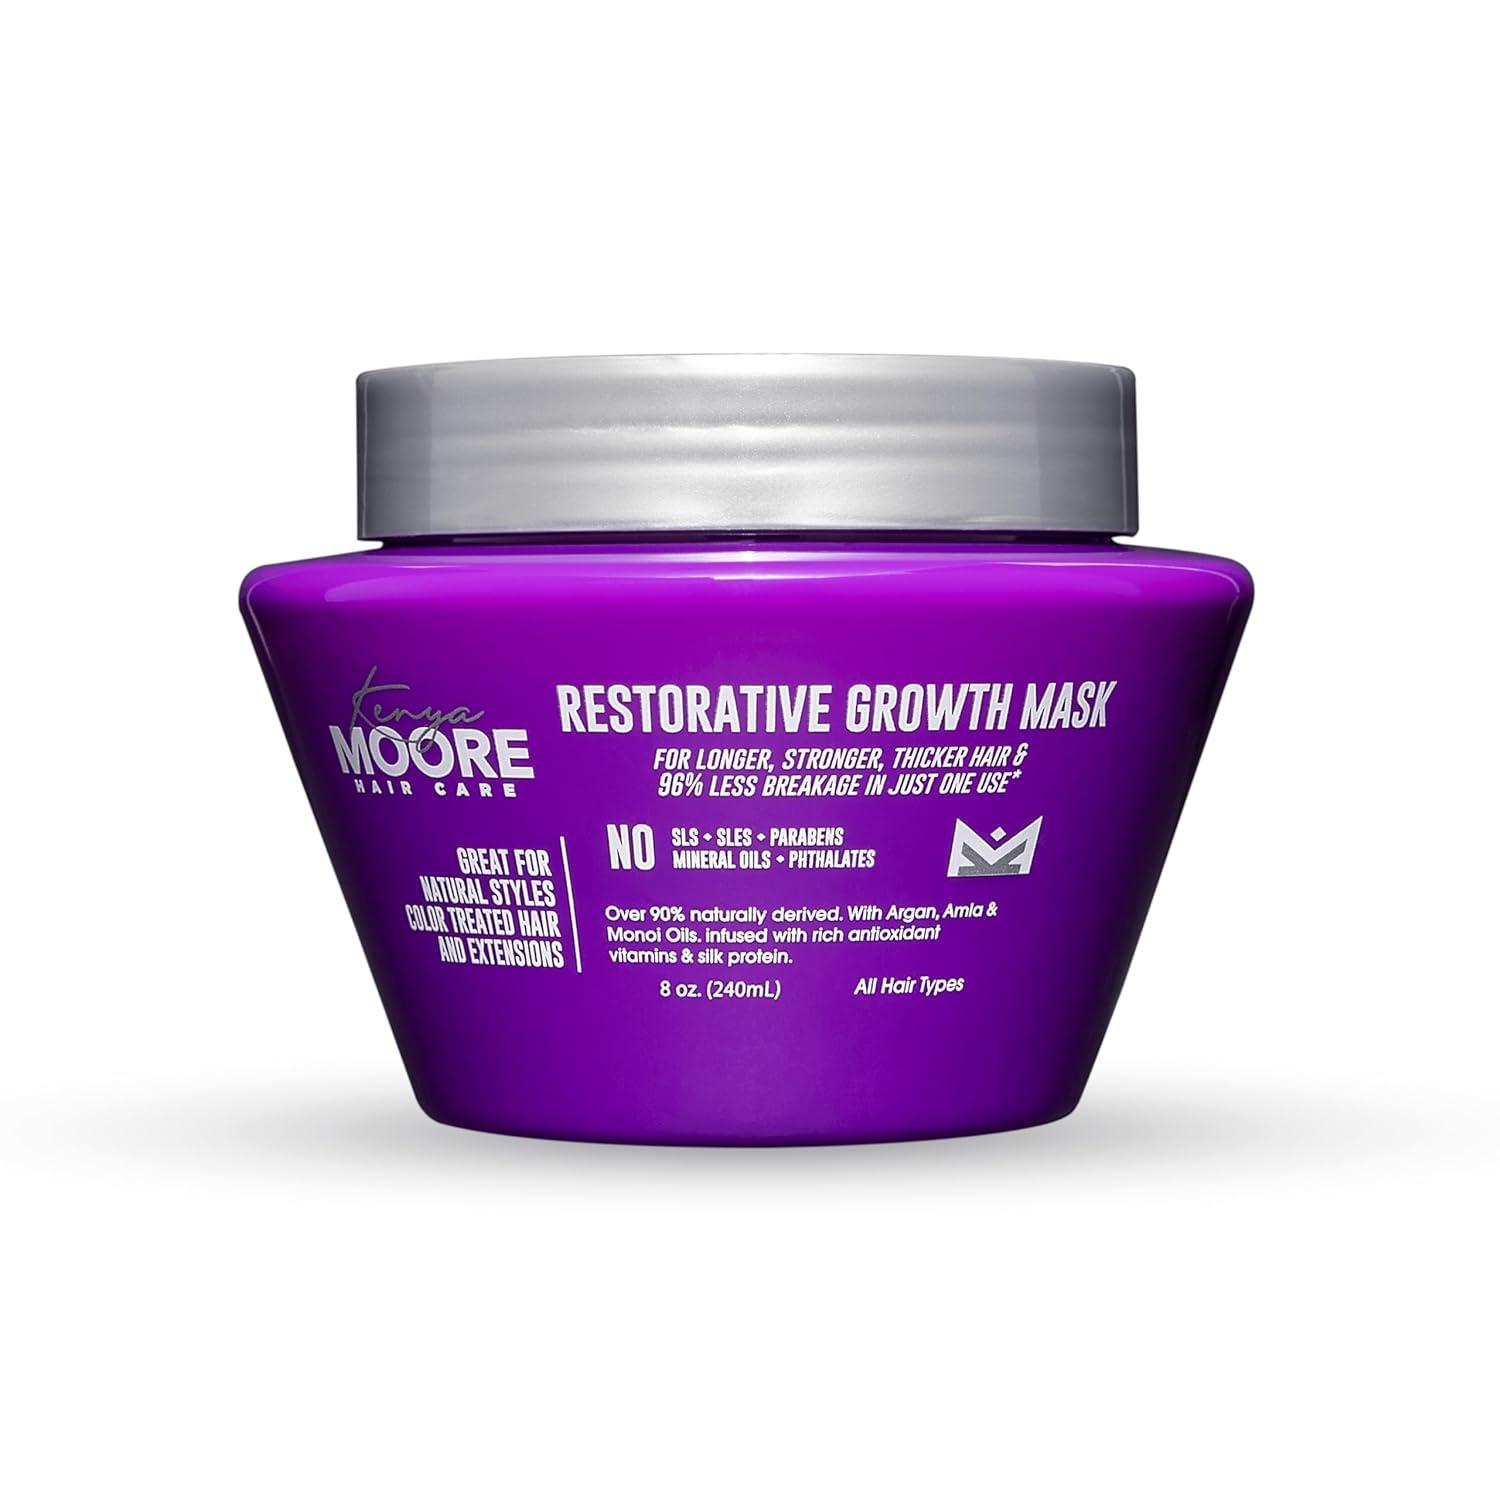 A purple jar of Kenya Moore Hair Care's Restorative Growth Mask